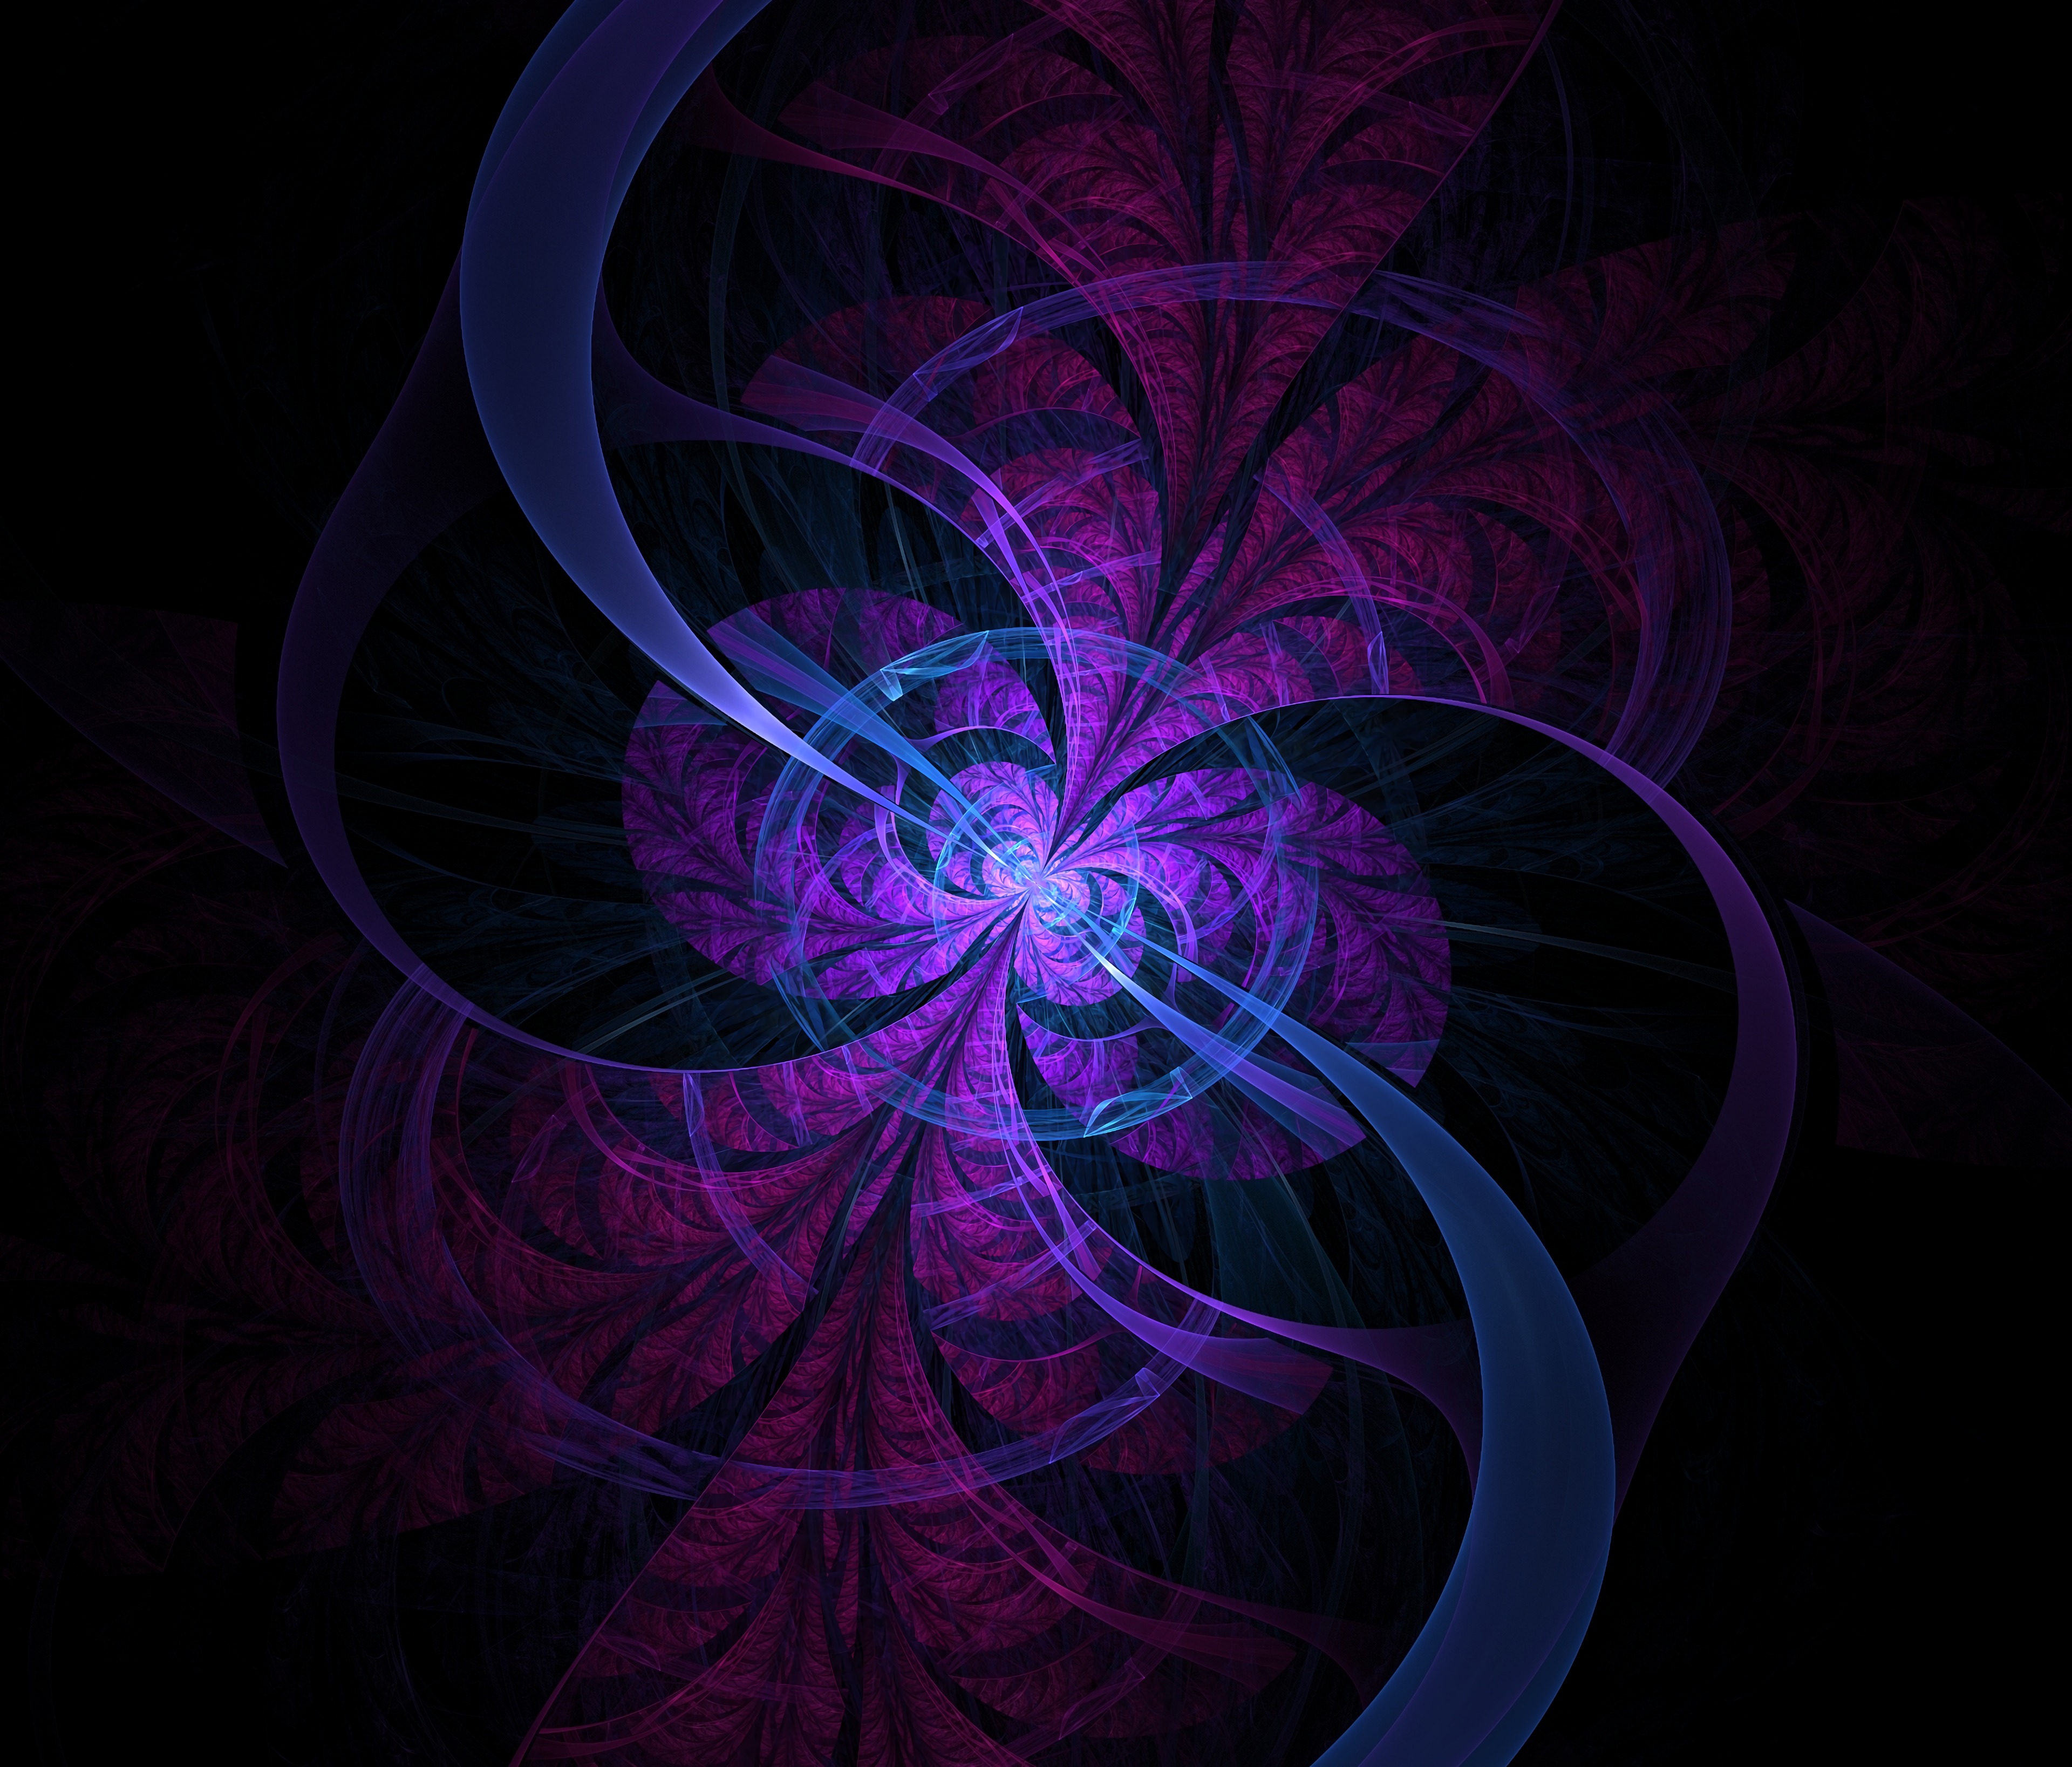 purple, abstract, dark, lines, violet, circles, fractal, diffusion, dispersion